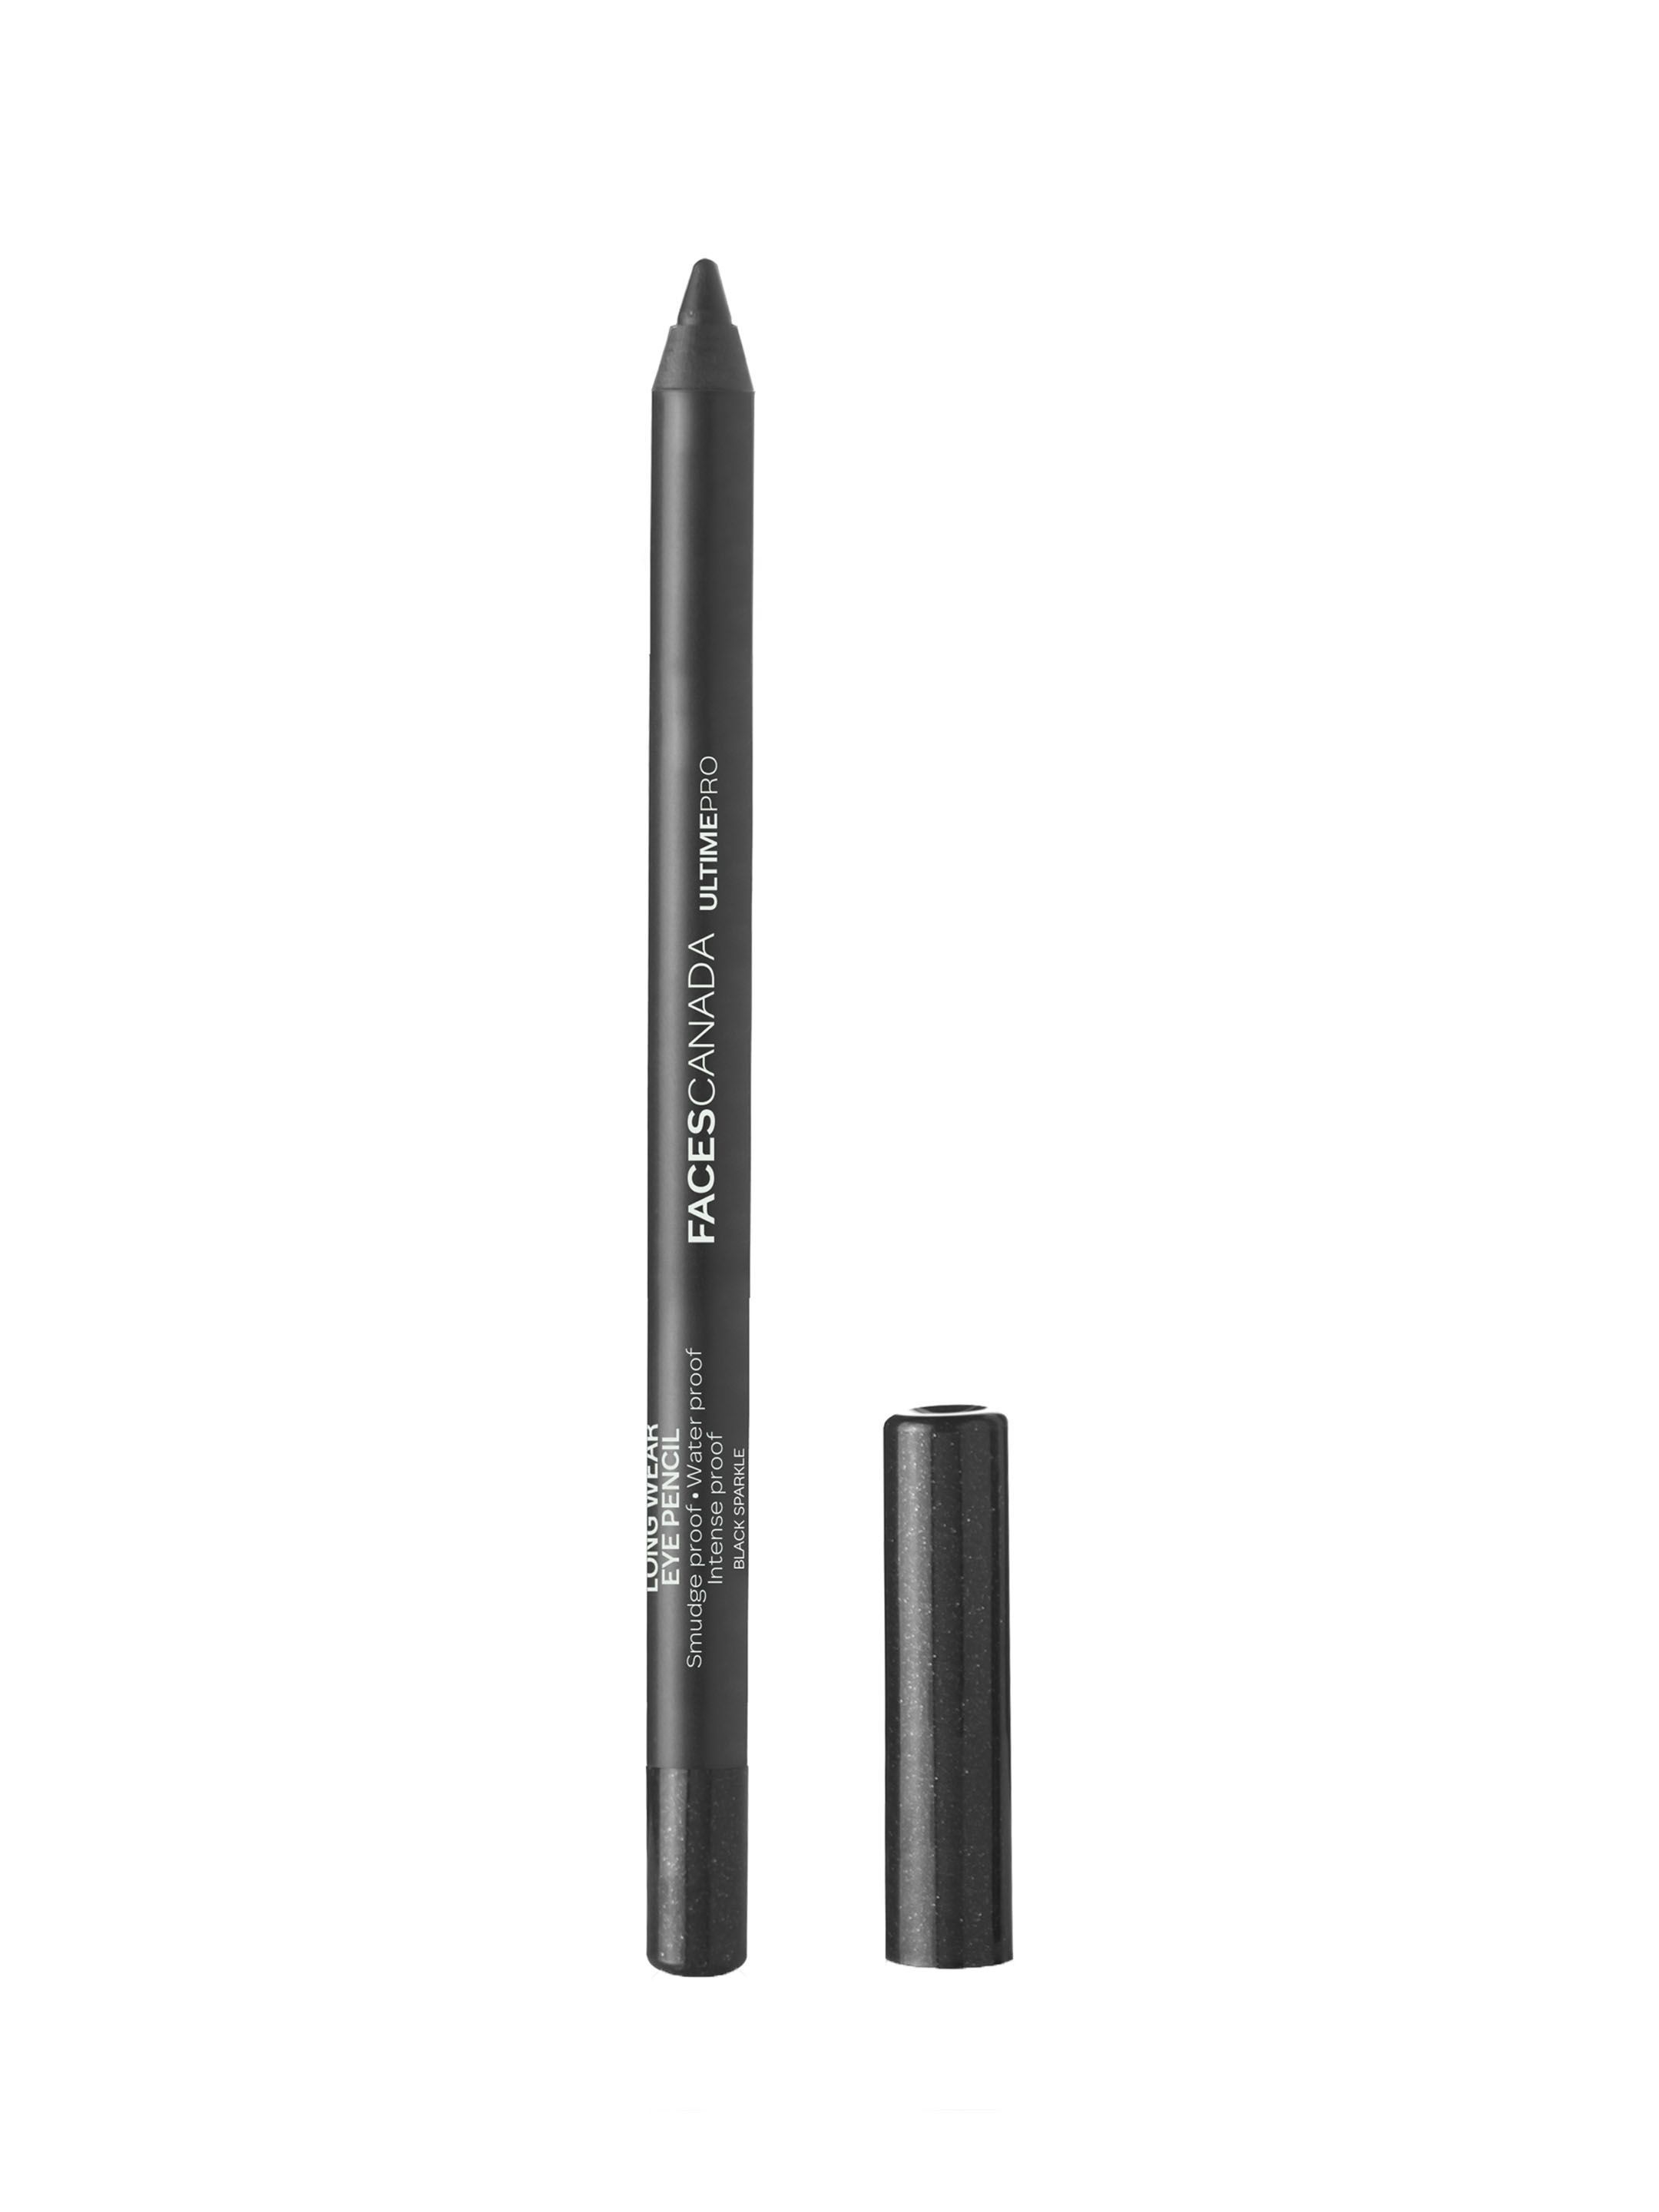 FACES CANADA Black Sparkle Longwear Eye Pencil 03 Price in India